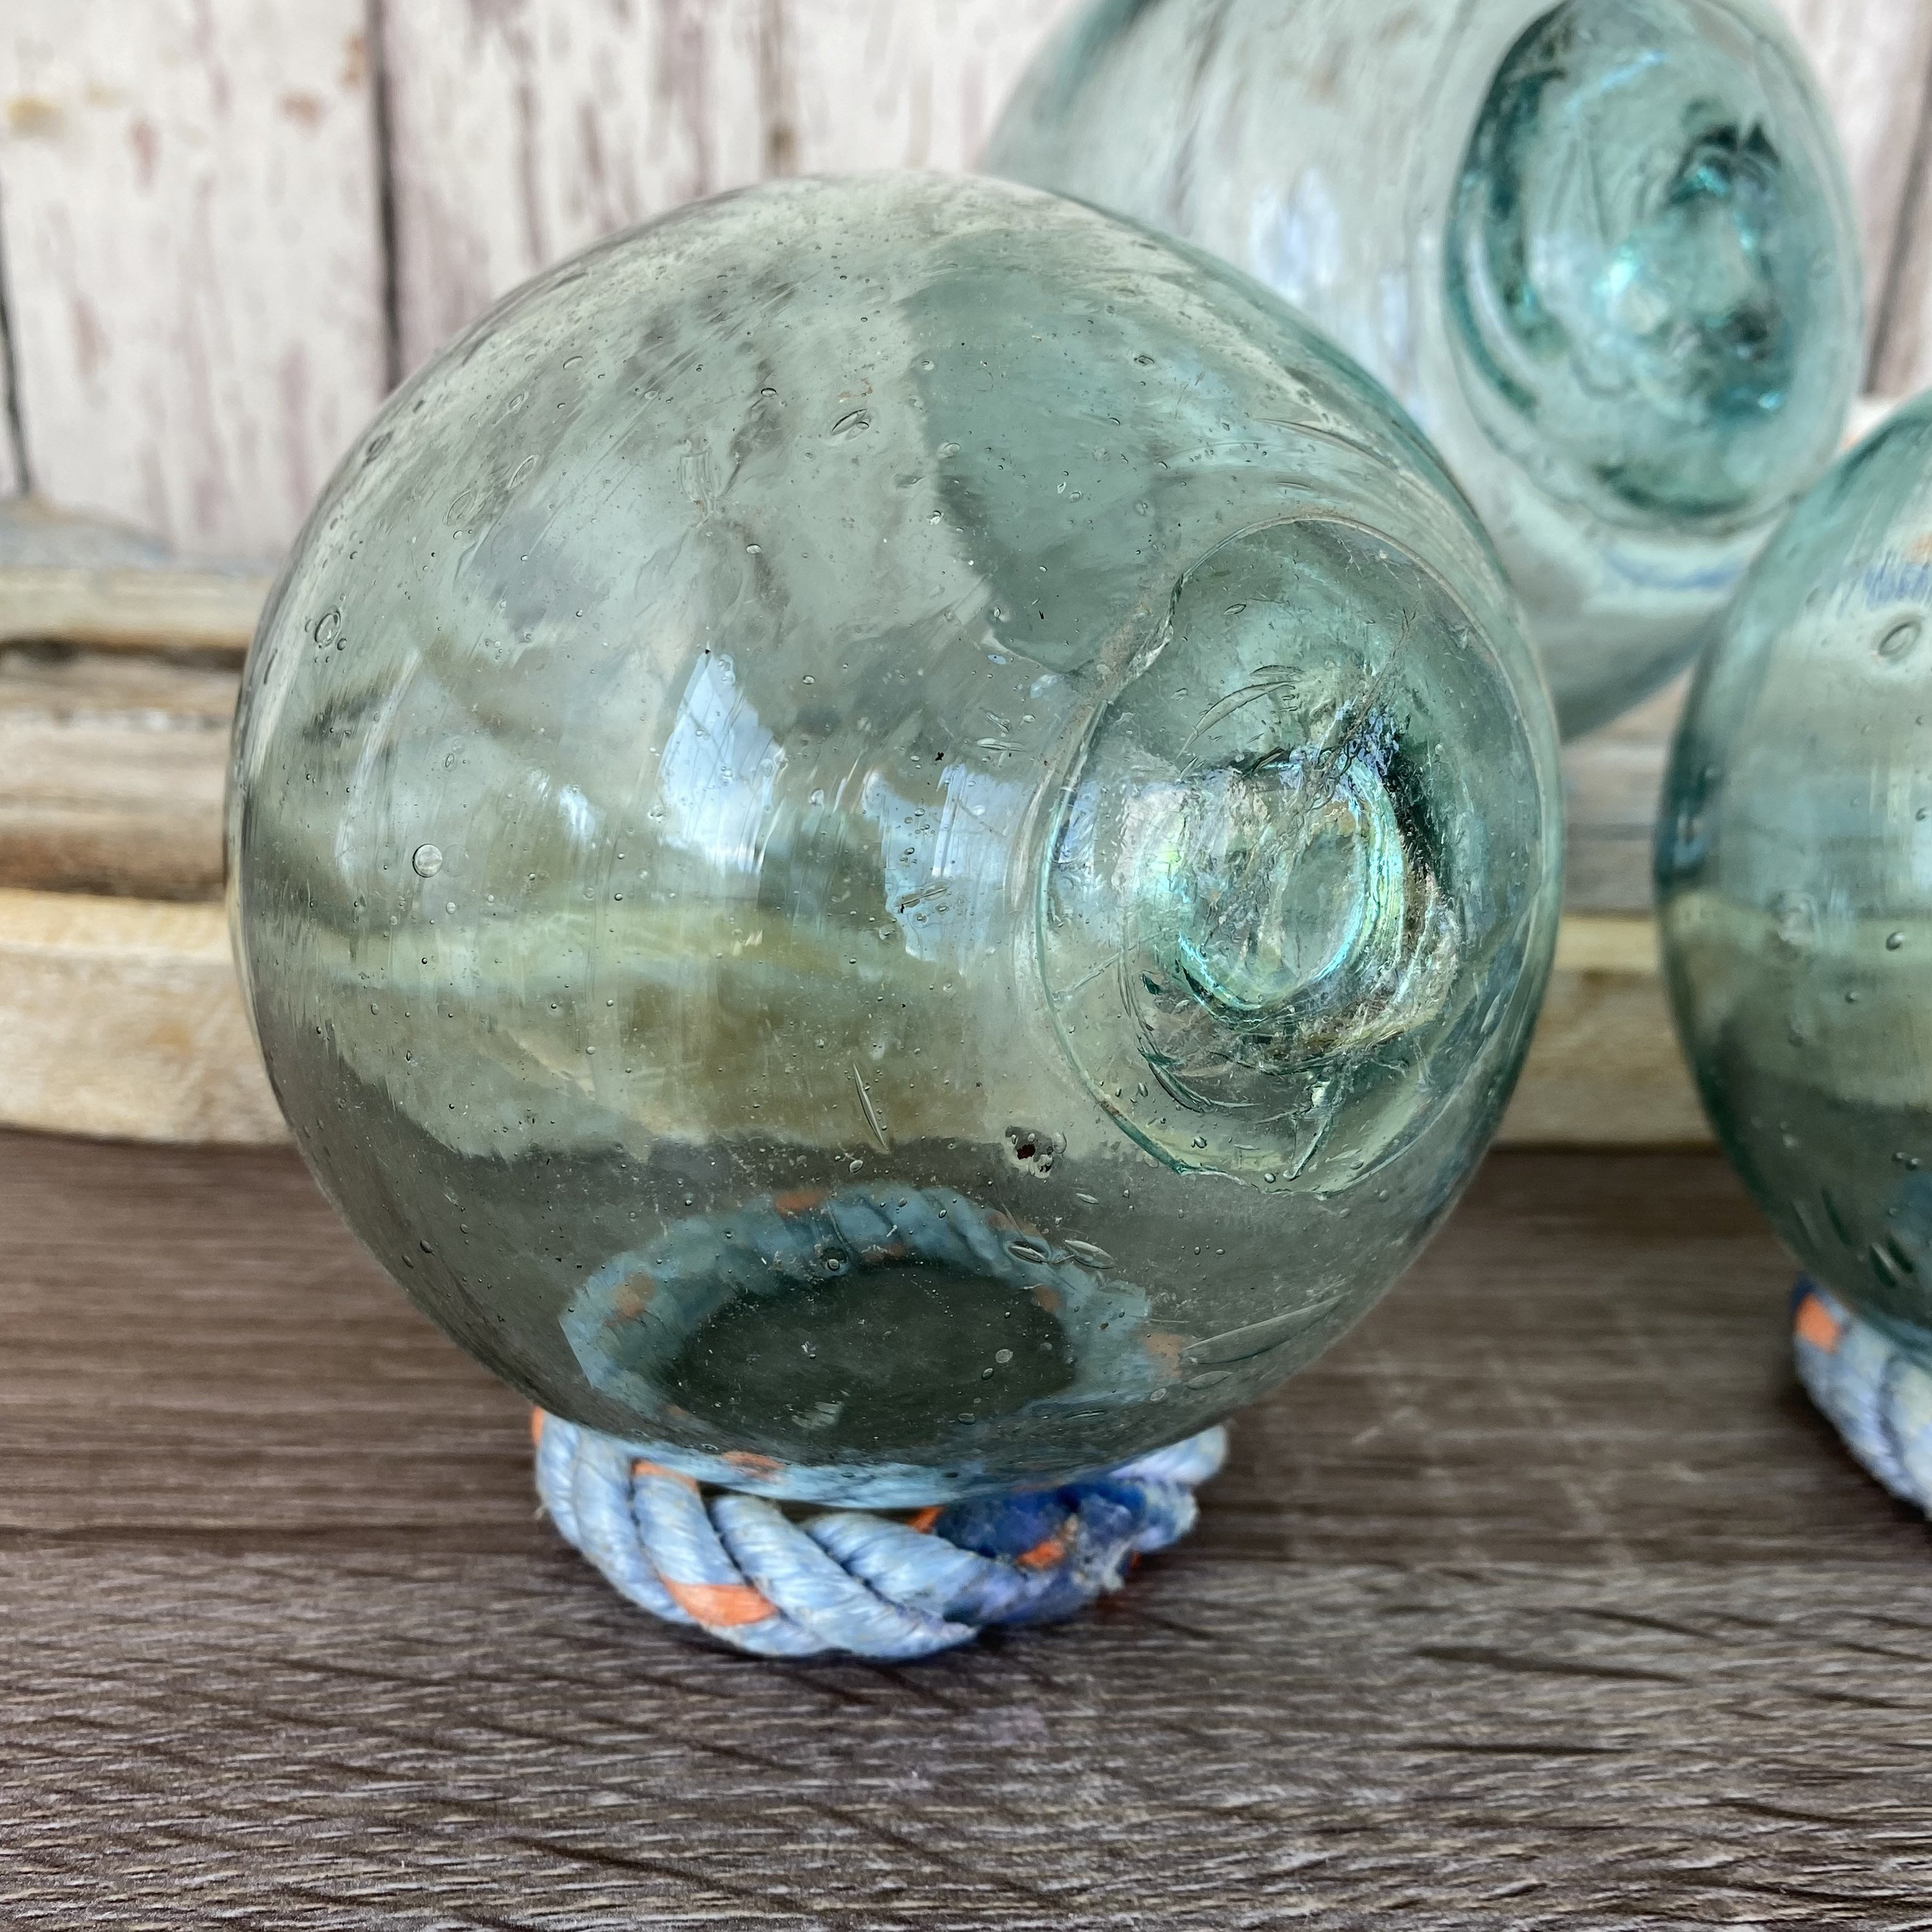 Japanese Glass Fishing Floats, 4” Softball Size, Authentic Glass